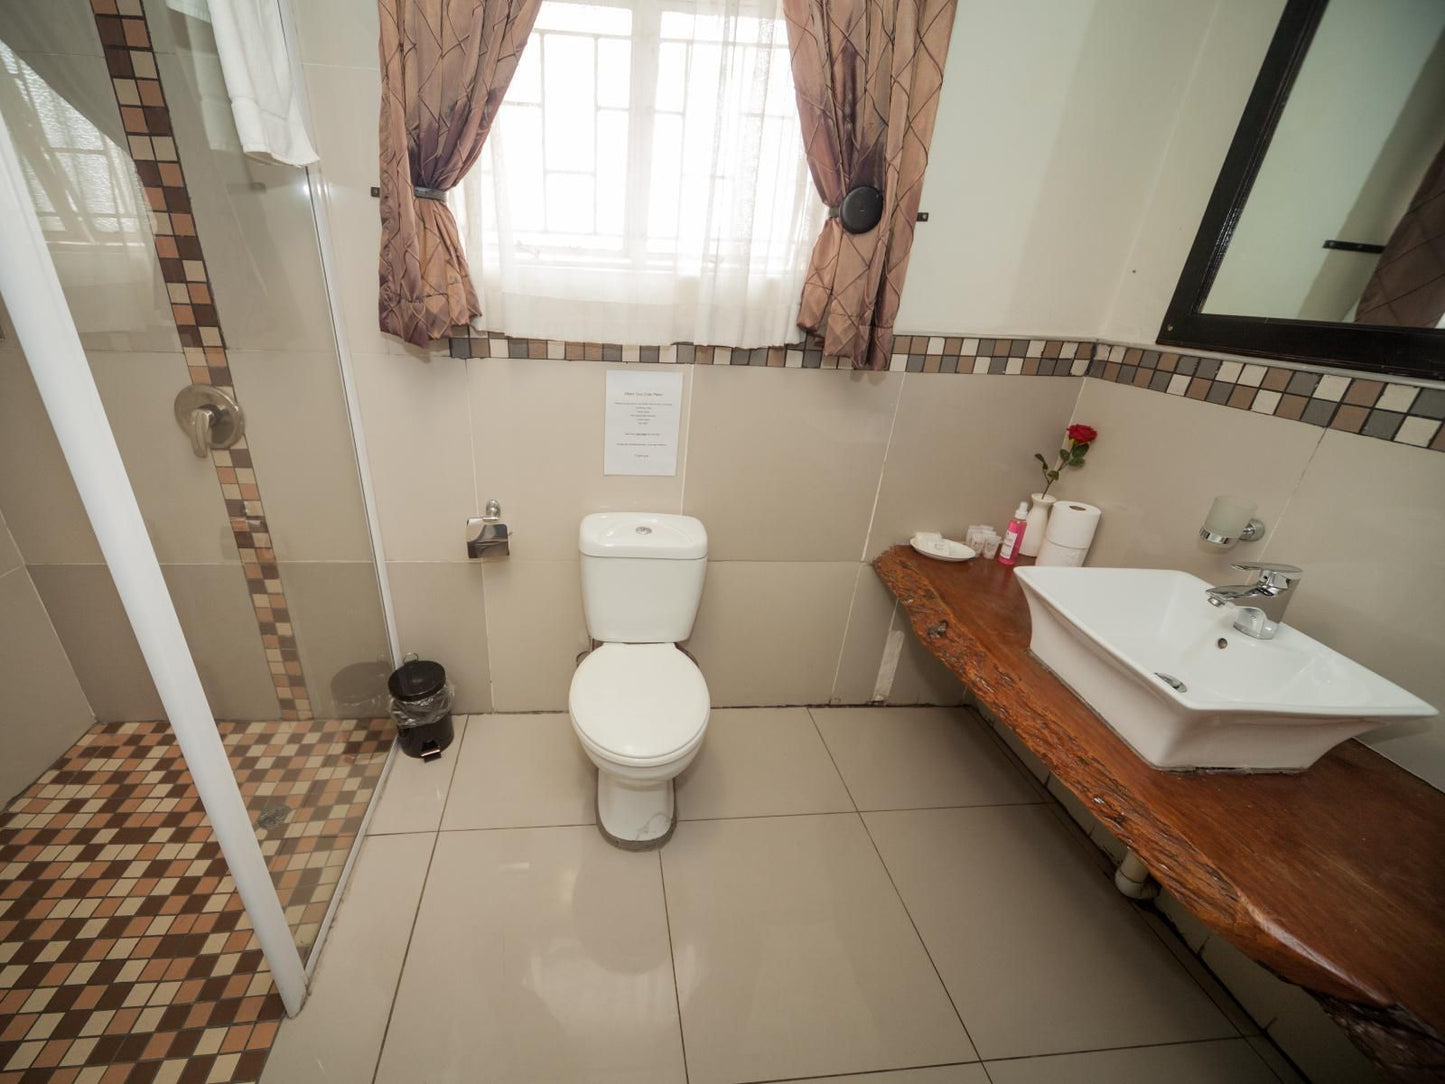 Dunwoodie Travel Lodge Waverley Pretoria Pretoria Tshwane Gauteng South Africa Sepia Tones, Bathroom